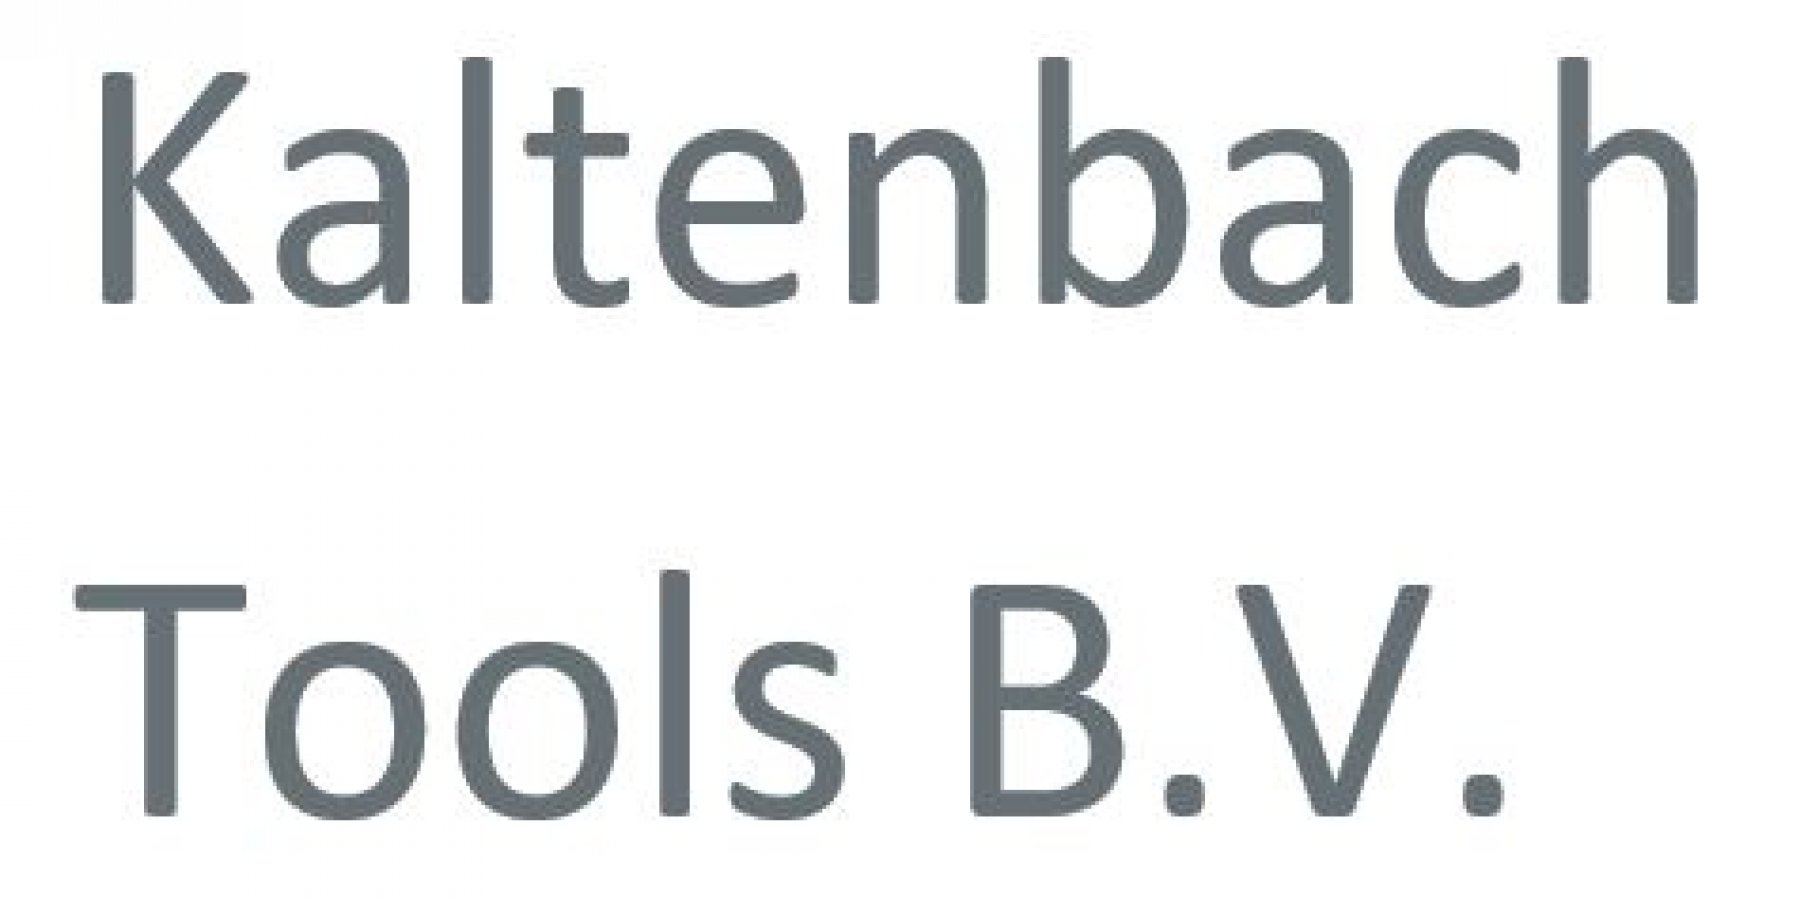 Kaltenbach Tools B.V.